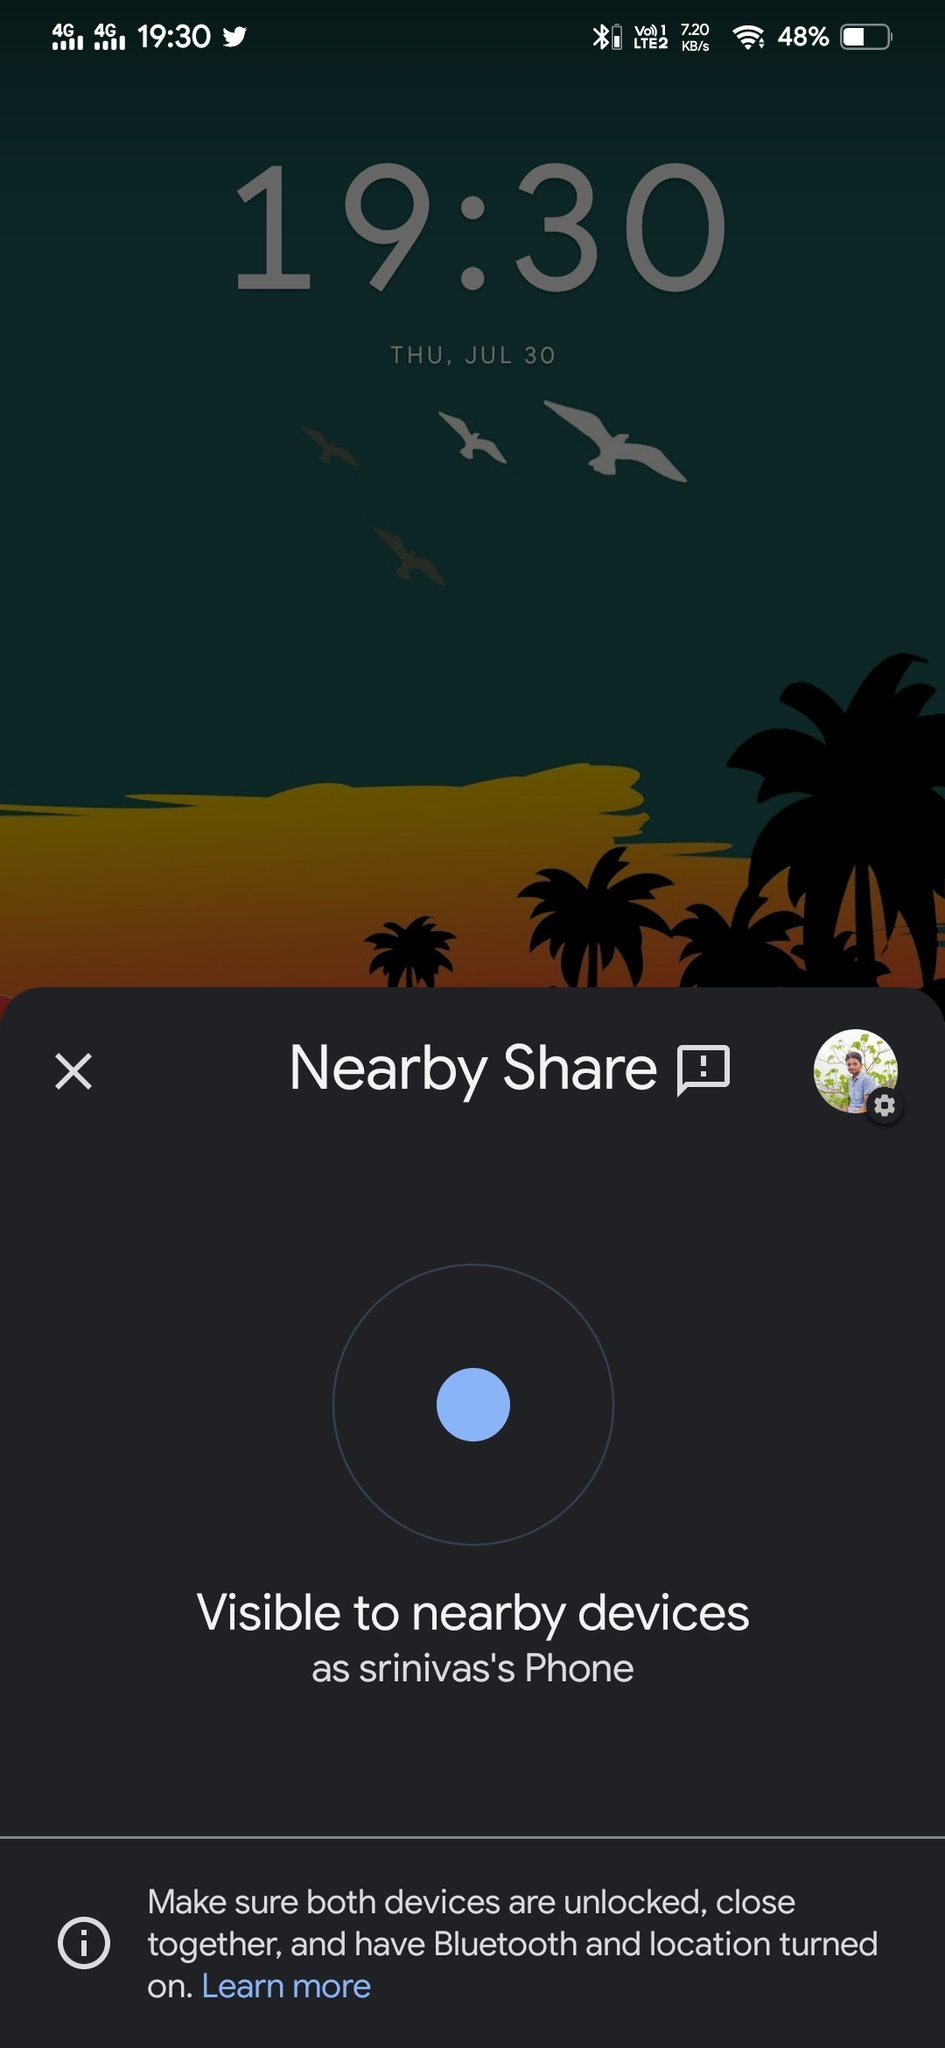 Kongsi Berdekatan datang ke Chrome di Android dan Desktop